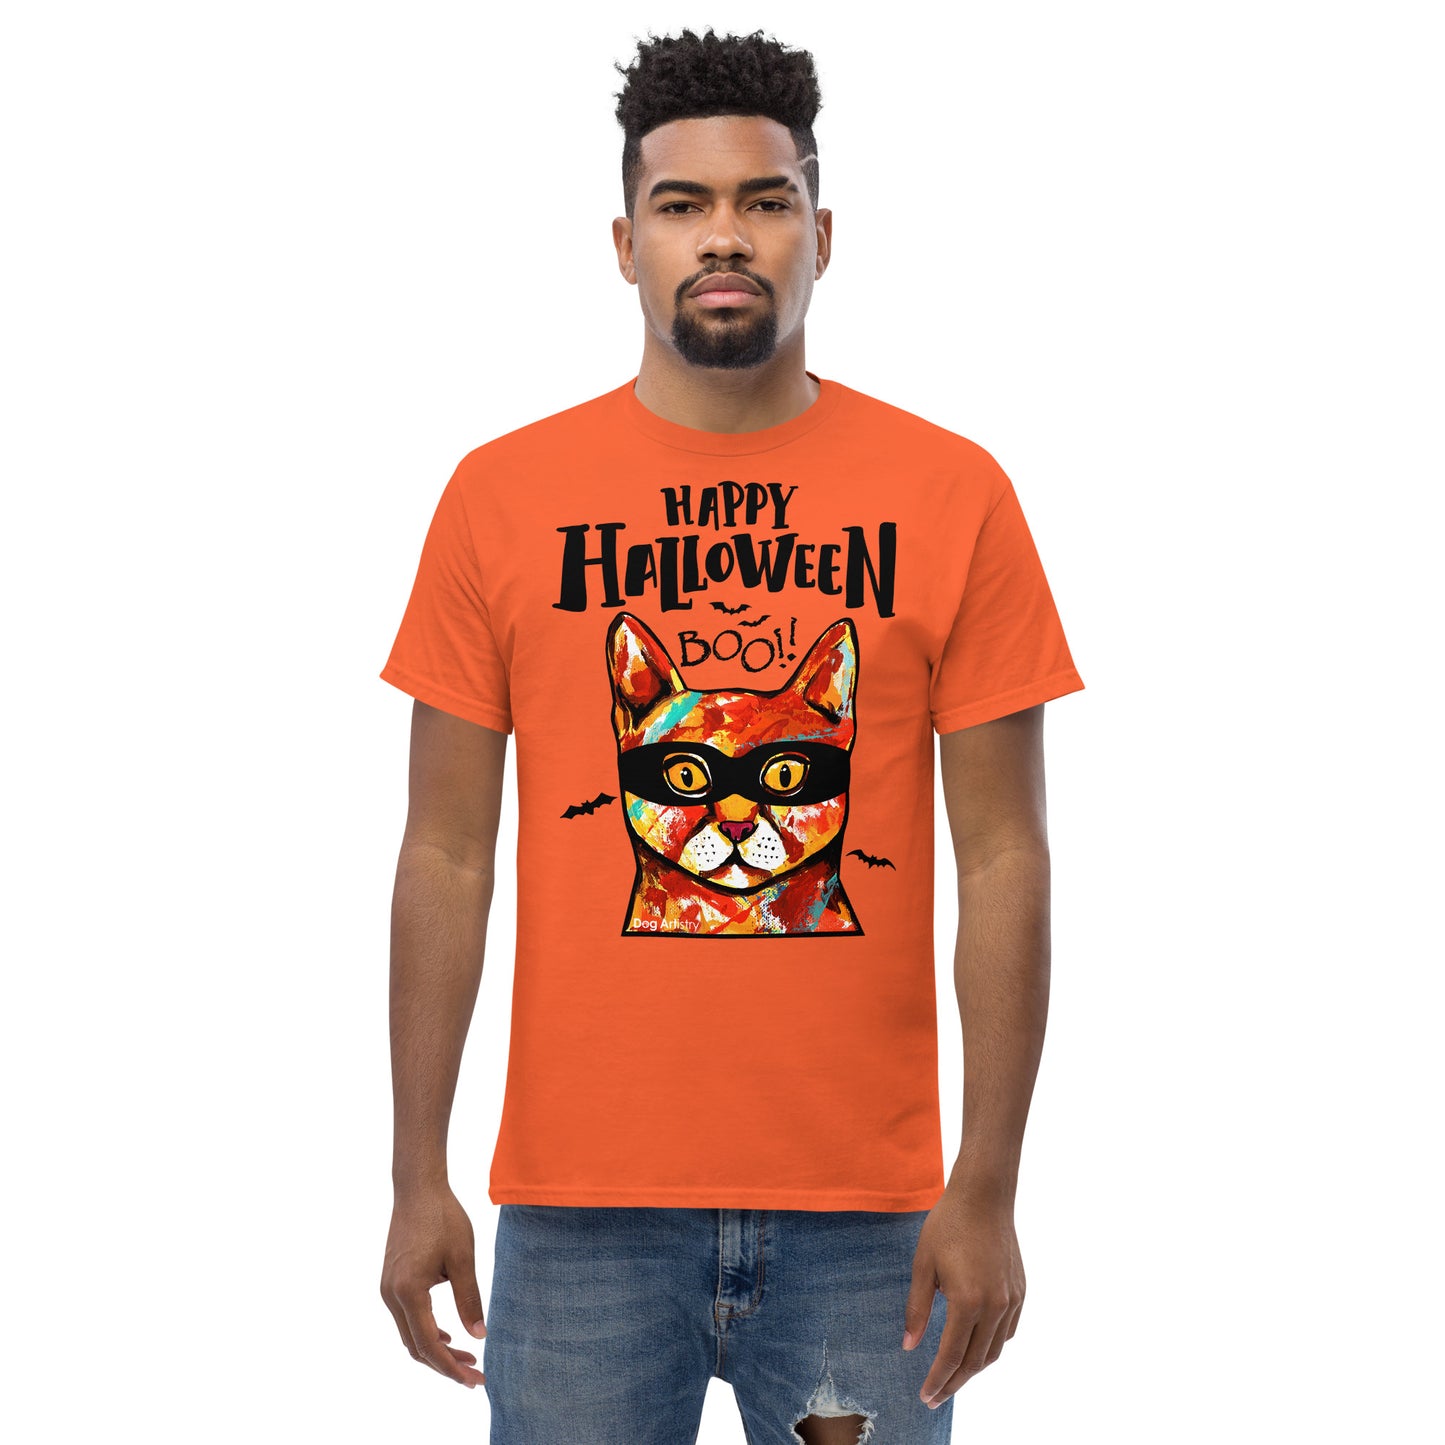 Funny Happy Halloween Cat wearing mask men’s orange t-shirt by Dog Artistry.